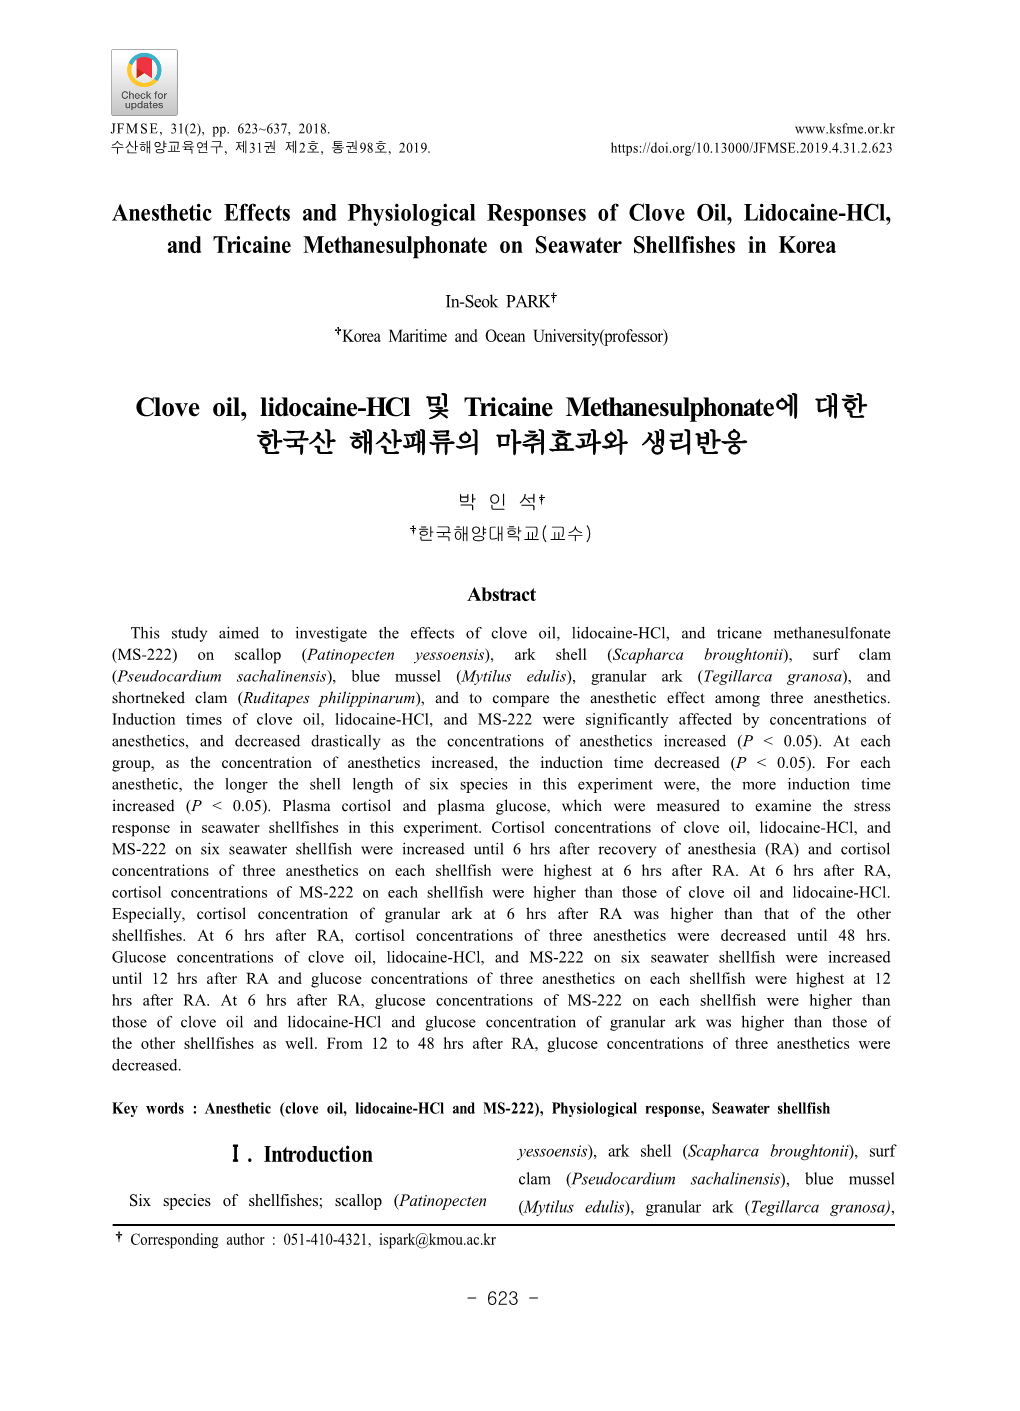 Clove Oil, Lidocaine-Hcl 및 Tricaine Methanesulphonate 에 대한 한국산